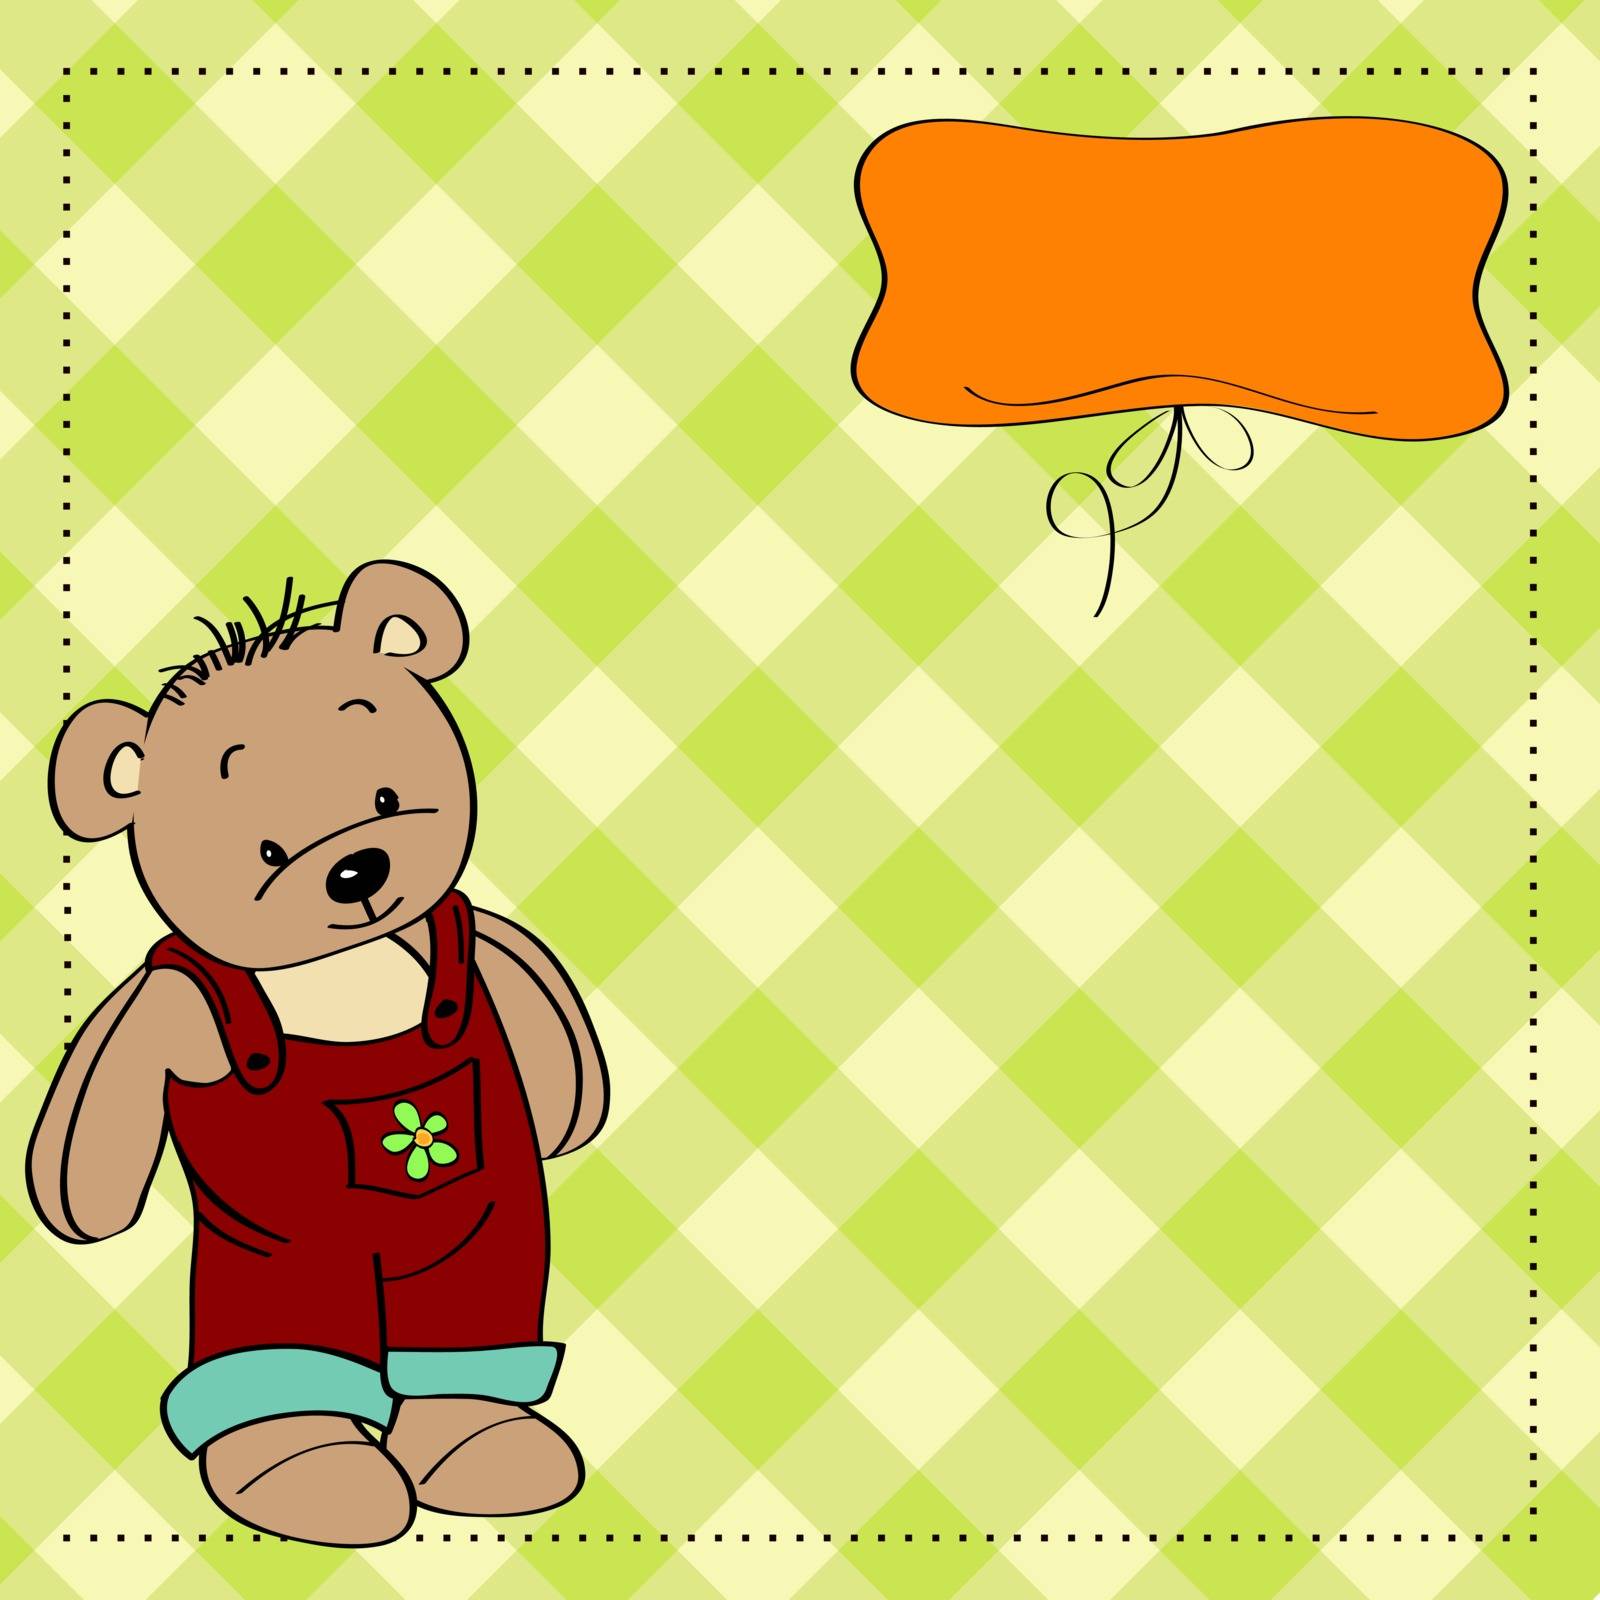 customizable childish card with funny teddy bear by balasoiu